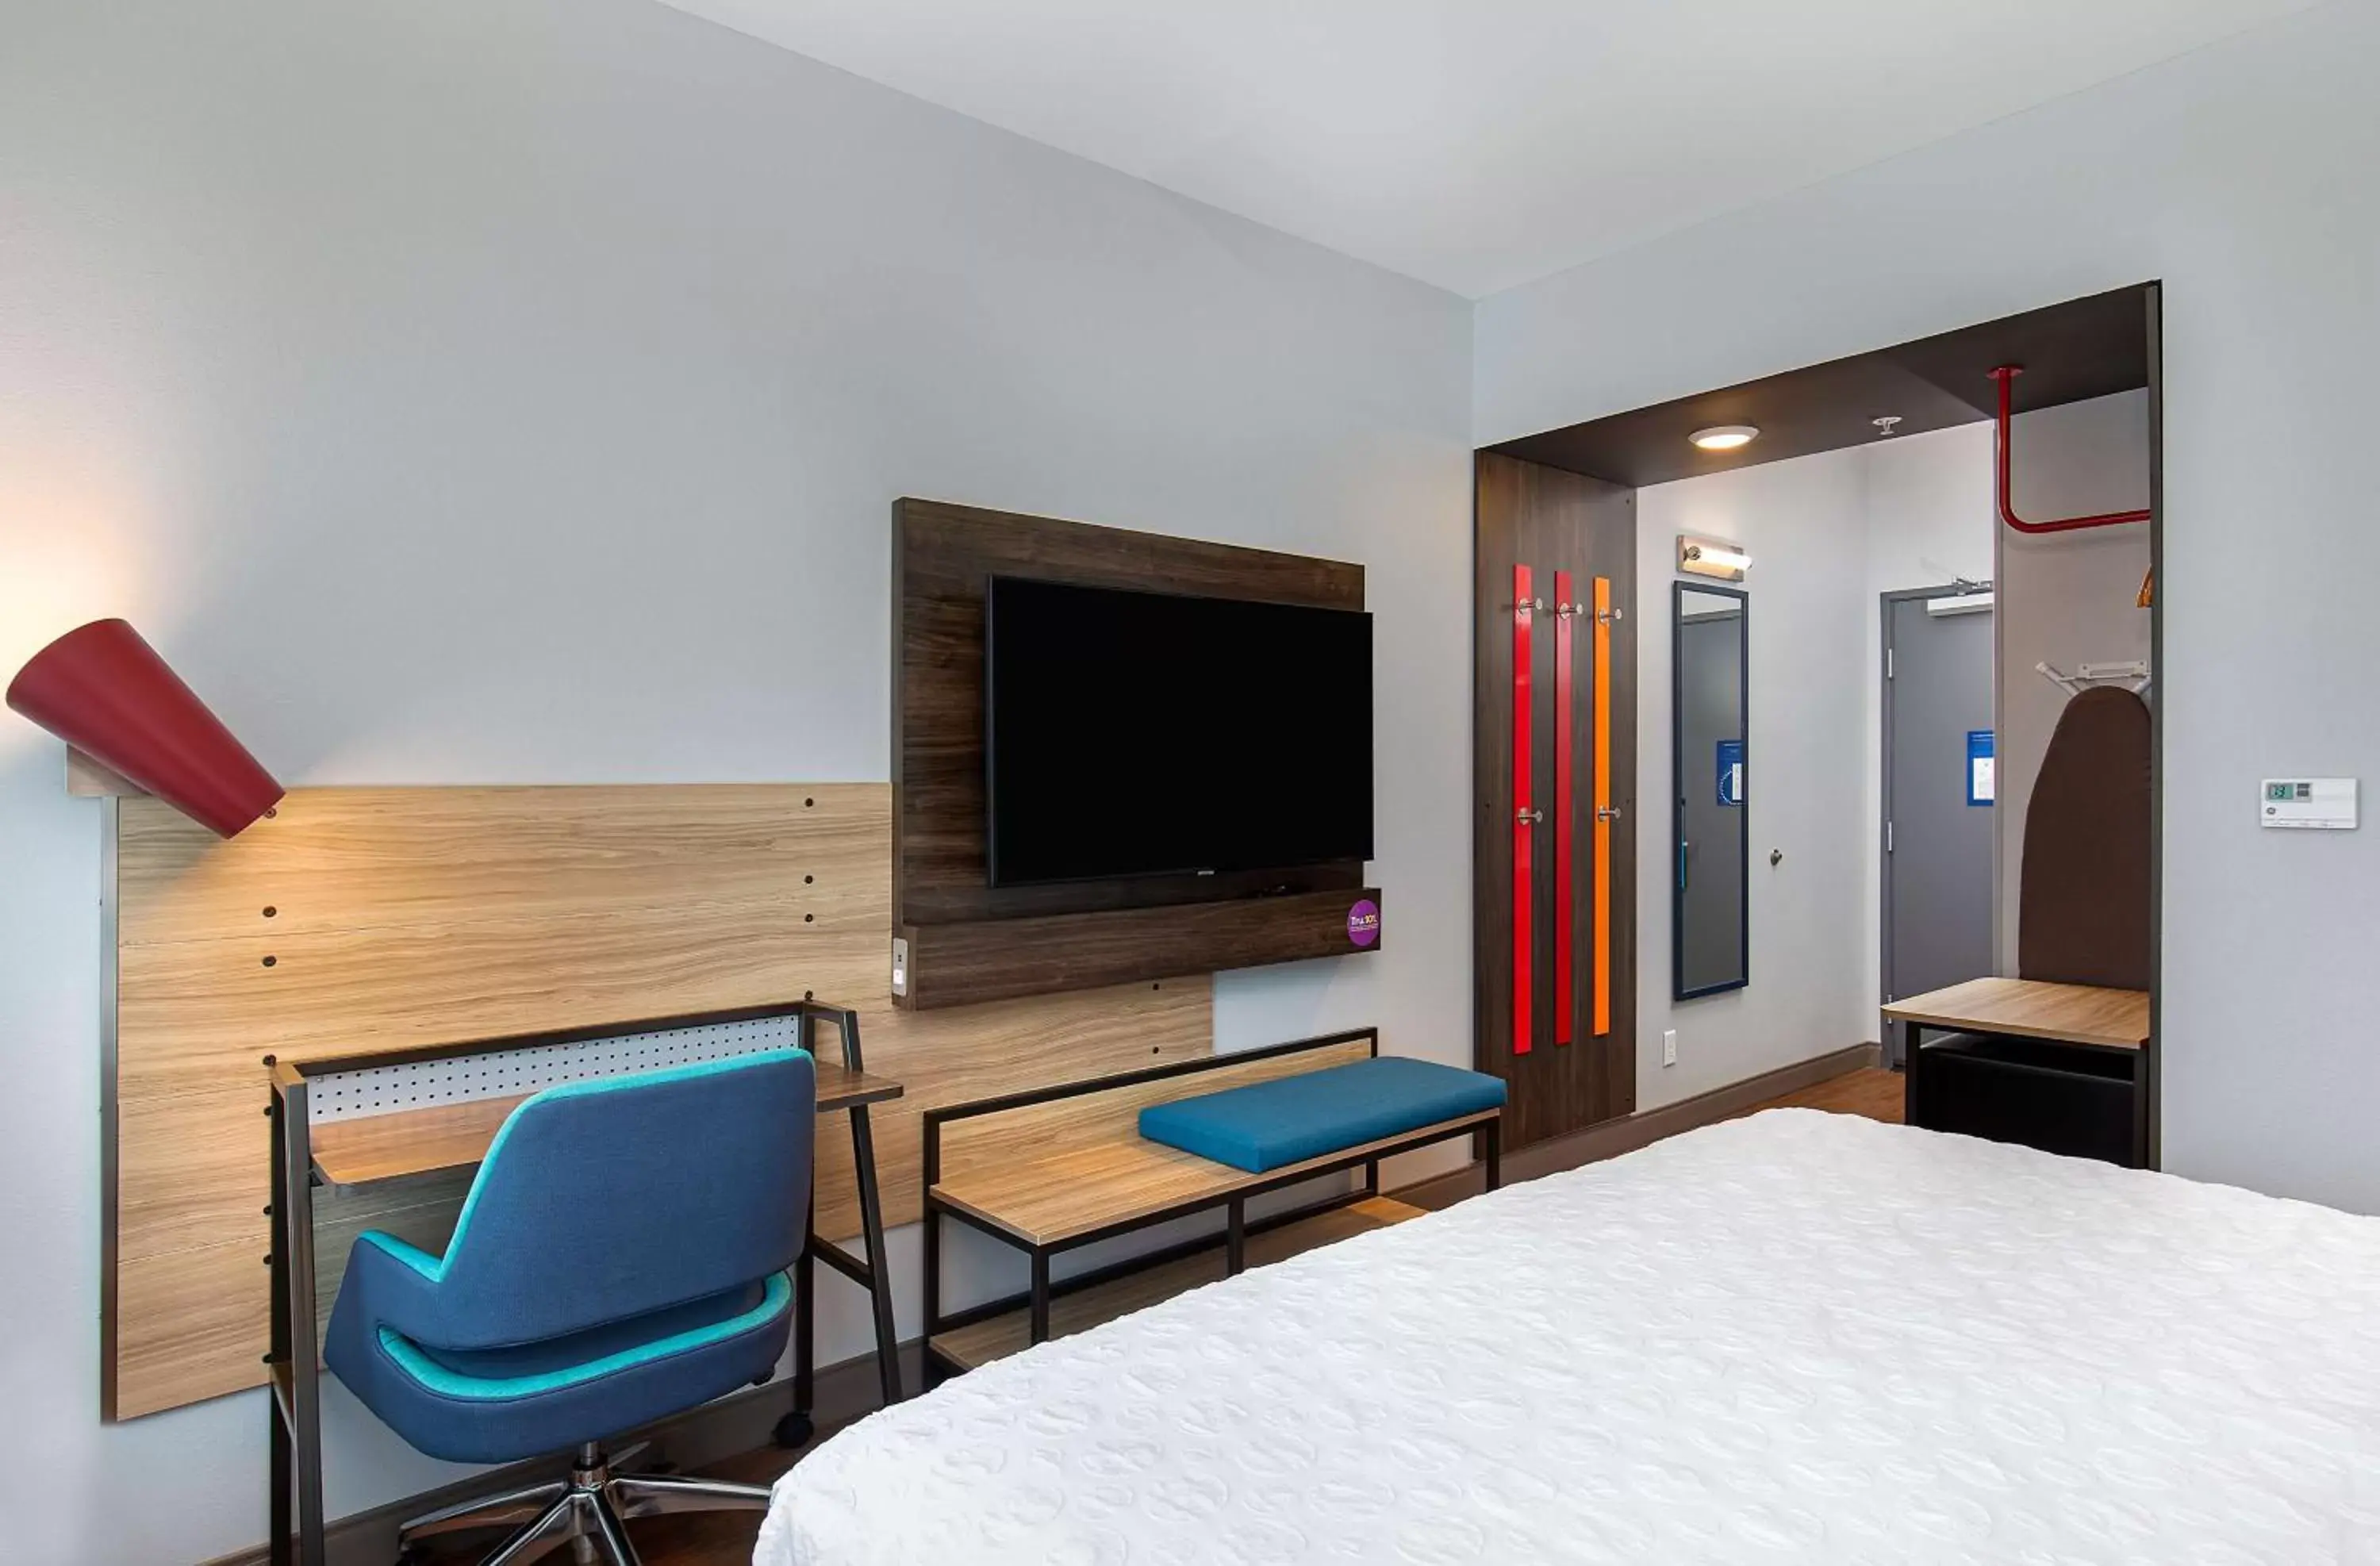 Bedroom, TV/Entertainment Center in Tru By Hilton Lexington University Medical Center, Ky